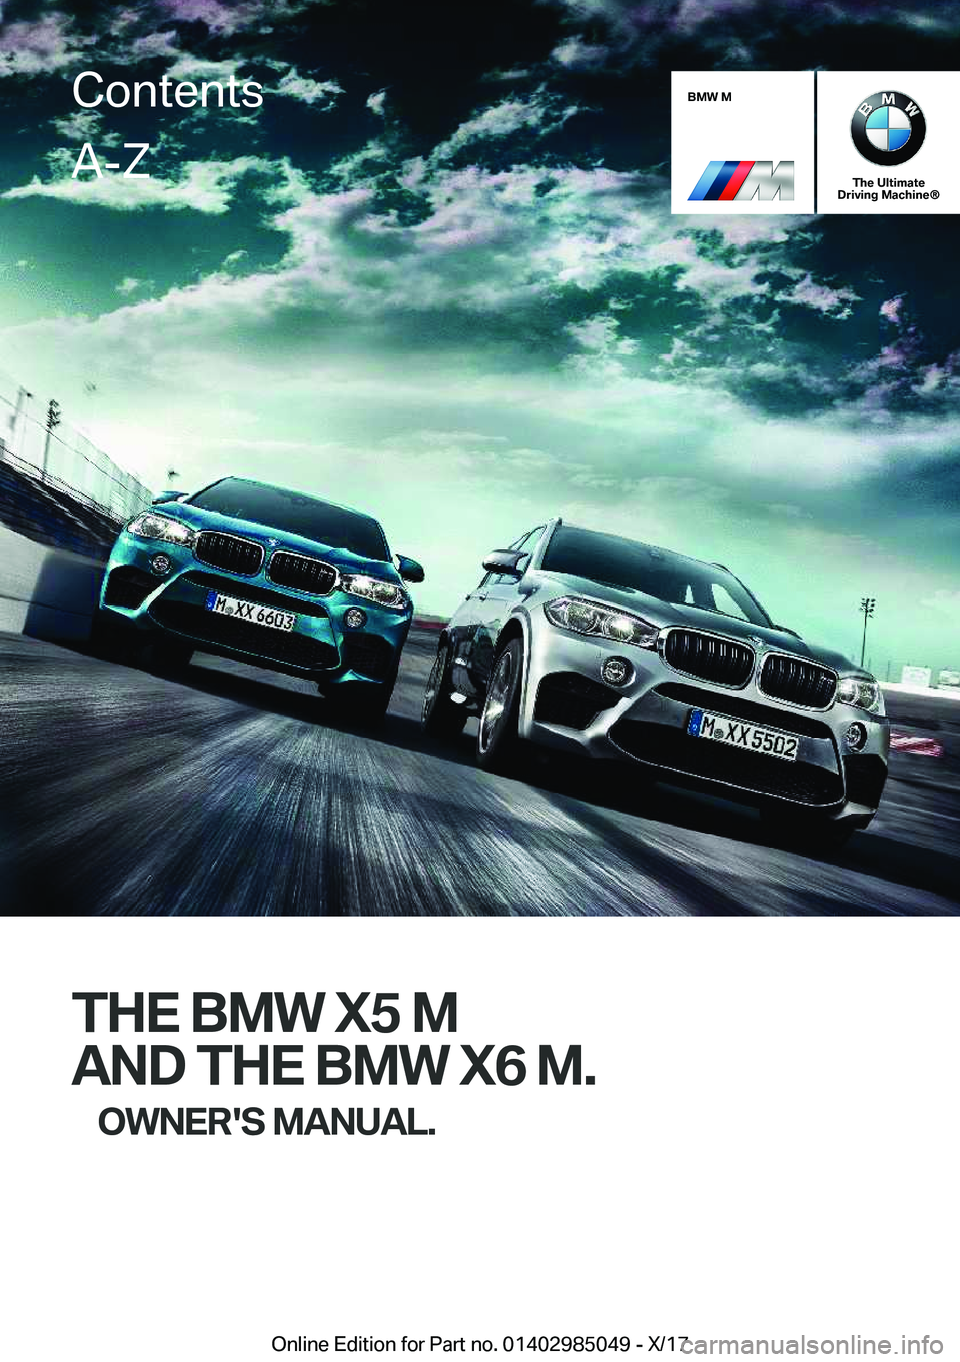 BMW X5M 2018  Owners Manual �B�M�W��M
�T�h�e��U�l�t�i�m�a�t�e
�D�r�i�v�i�n�g��M�a�c�h�i�n�e�n
�T�H�E��B�M�W��X�5��M
�A�N�D��T�H�E��B�M�W��X�6��M�. �O�W�N�E�R�'�S��M�A�N�U�A�L�.
�C�o�n�t�e�n�t�s�A�-�Z
�O�n�l�i�n�e�